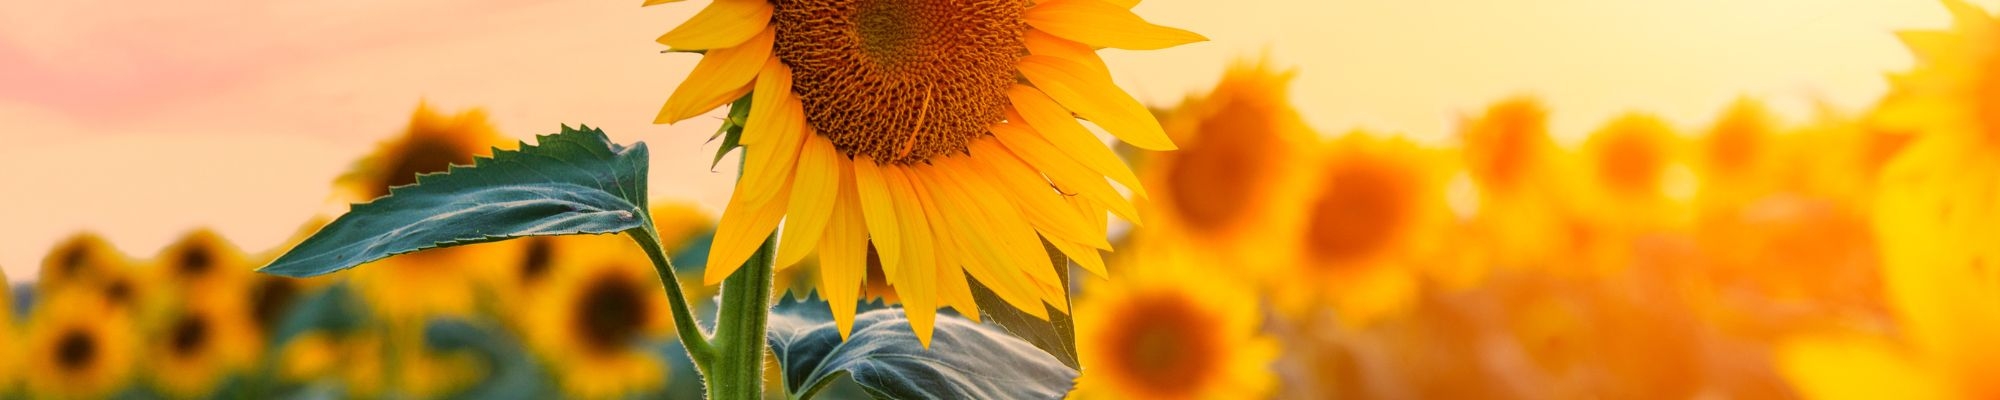 sunflower state